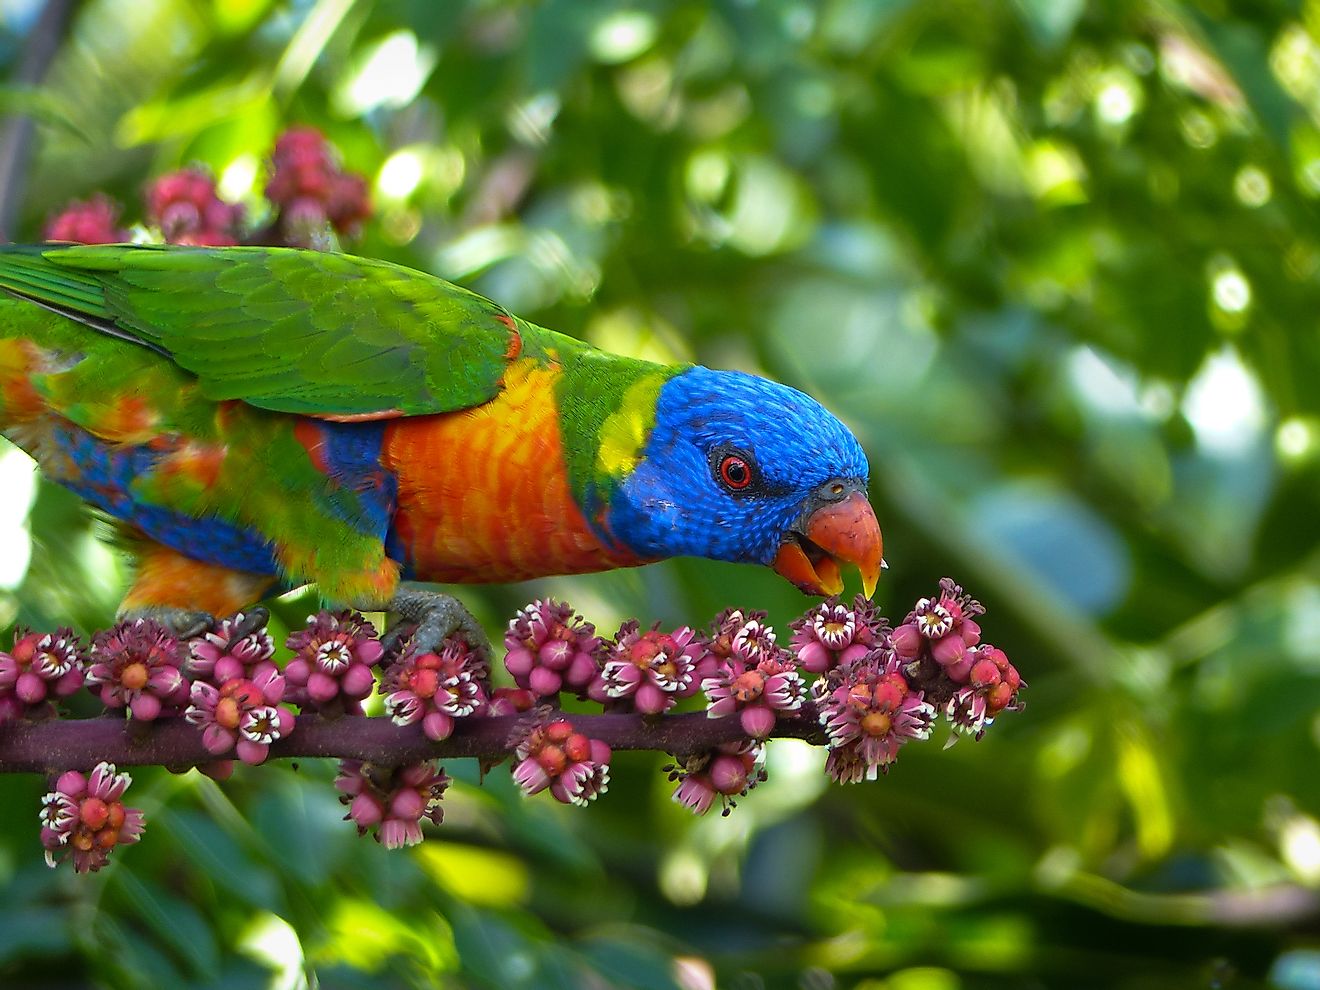 A rainbow lorikeet is a parrot species found in Australia.